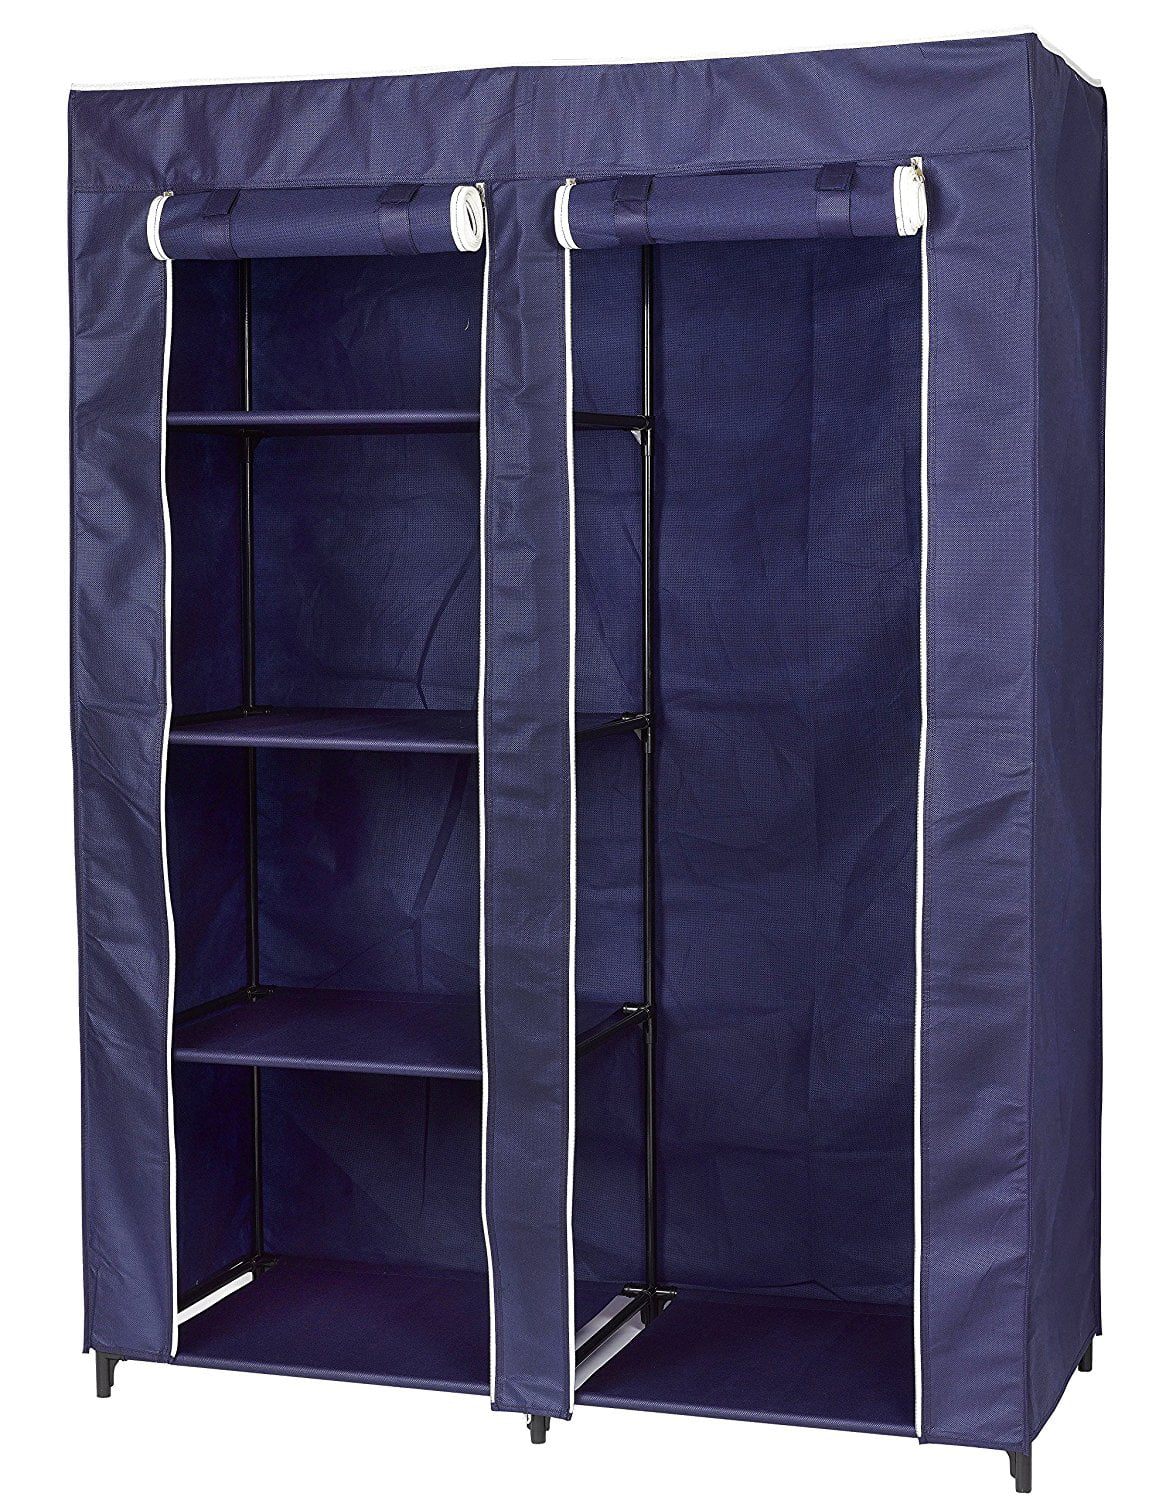 48 Inch Portable Closet - Navy - Walmart.com - Walmart.com